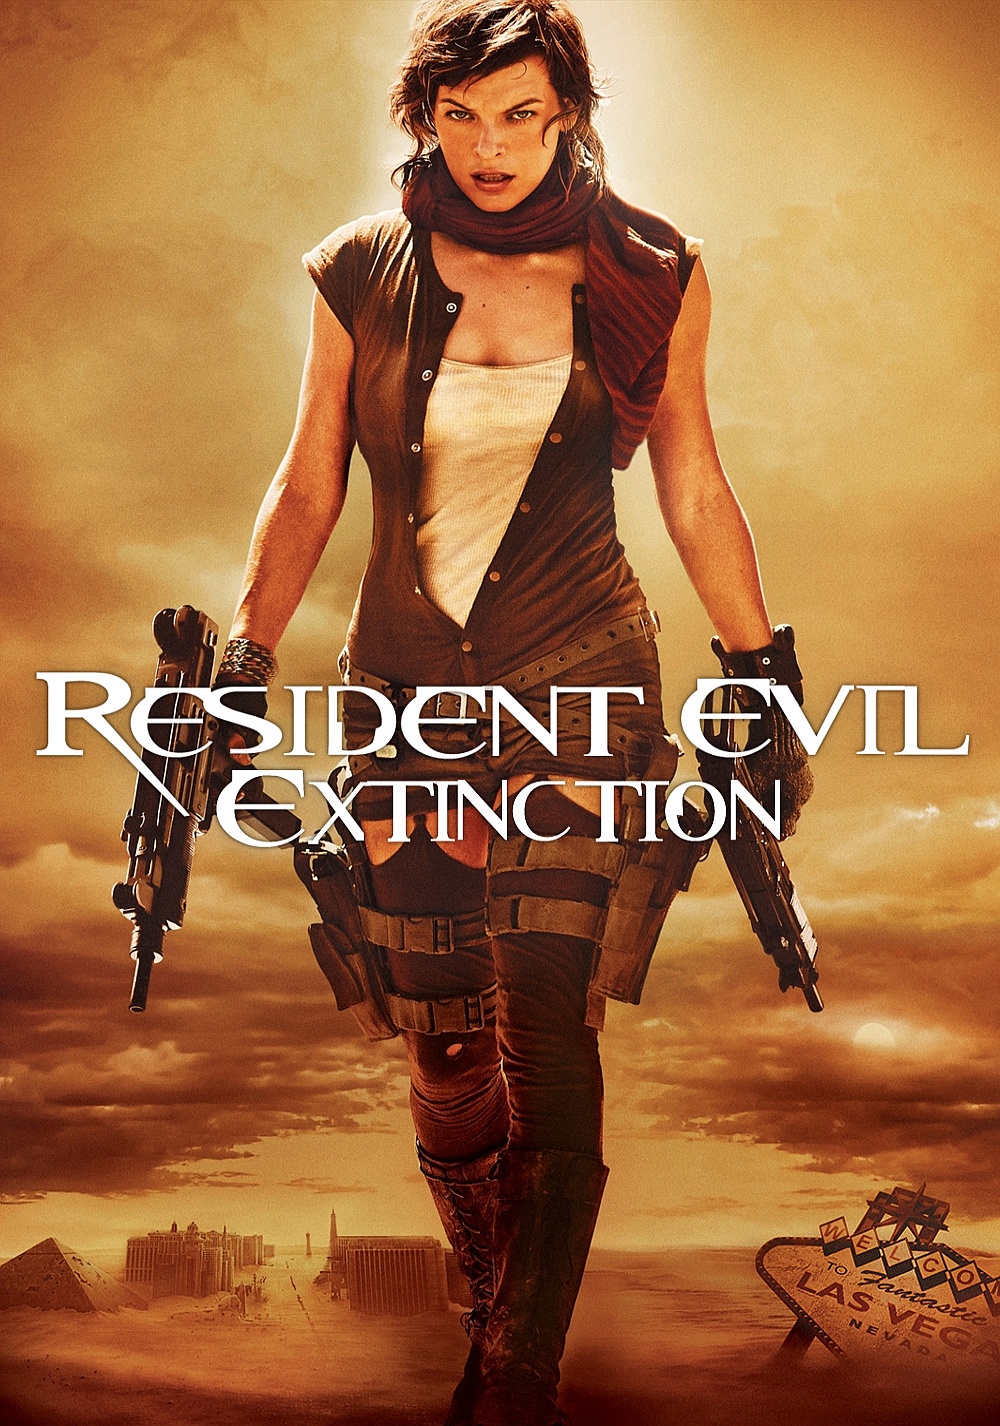 Stiahni si HD Filmy Resident Evil: Zanik/ Resident Evil: Extinction(2007)(CZ/EN)[Remux] = CSFD 67%